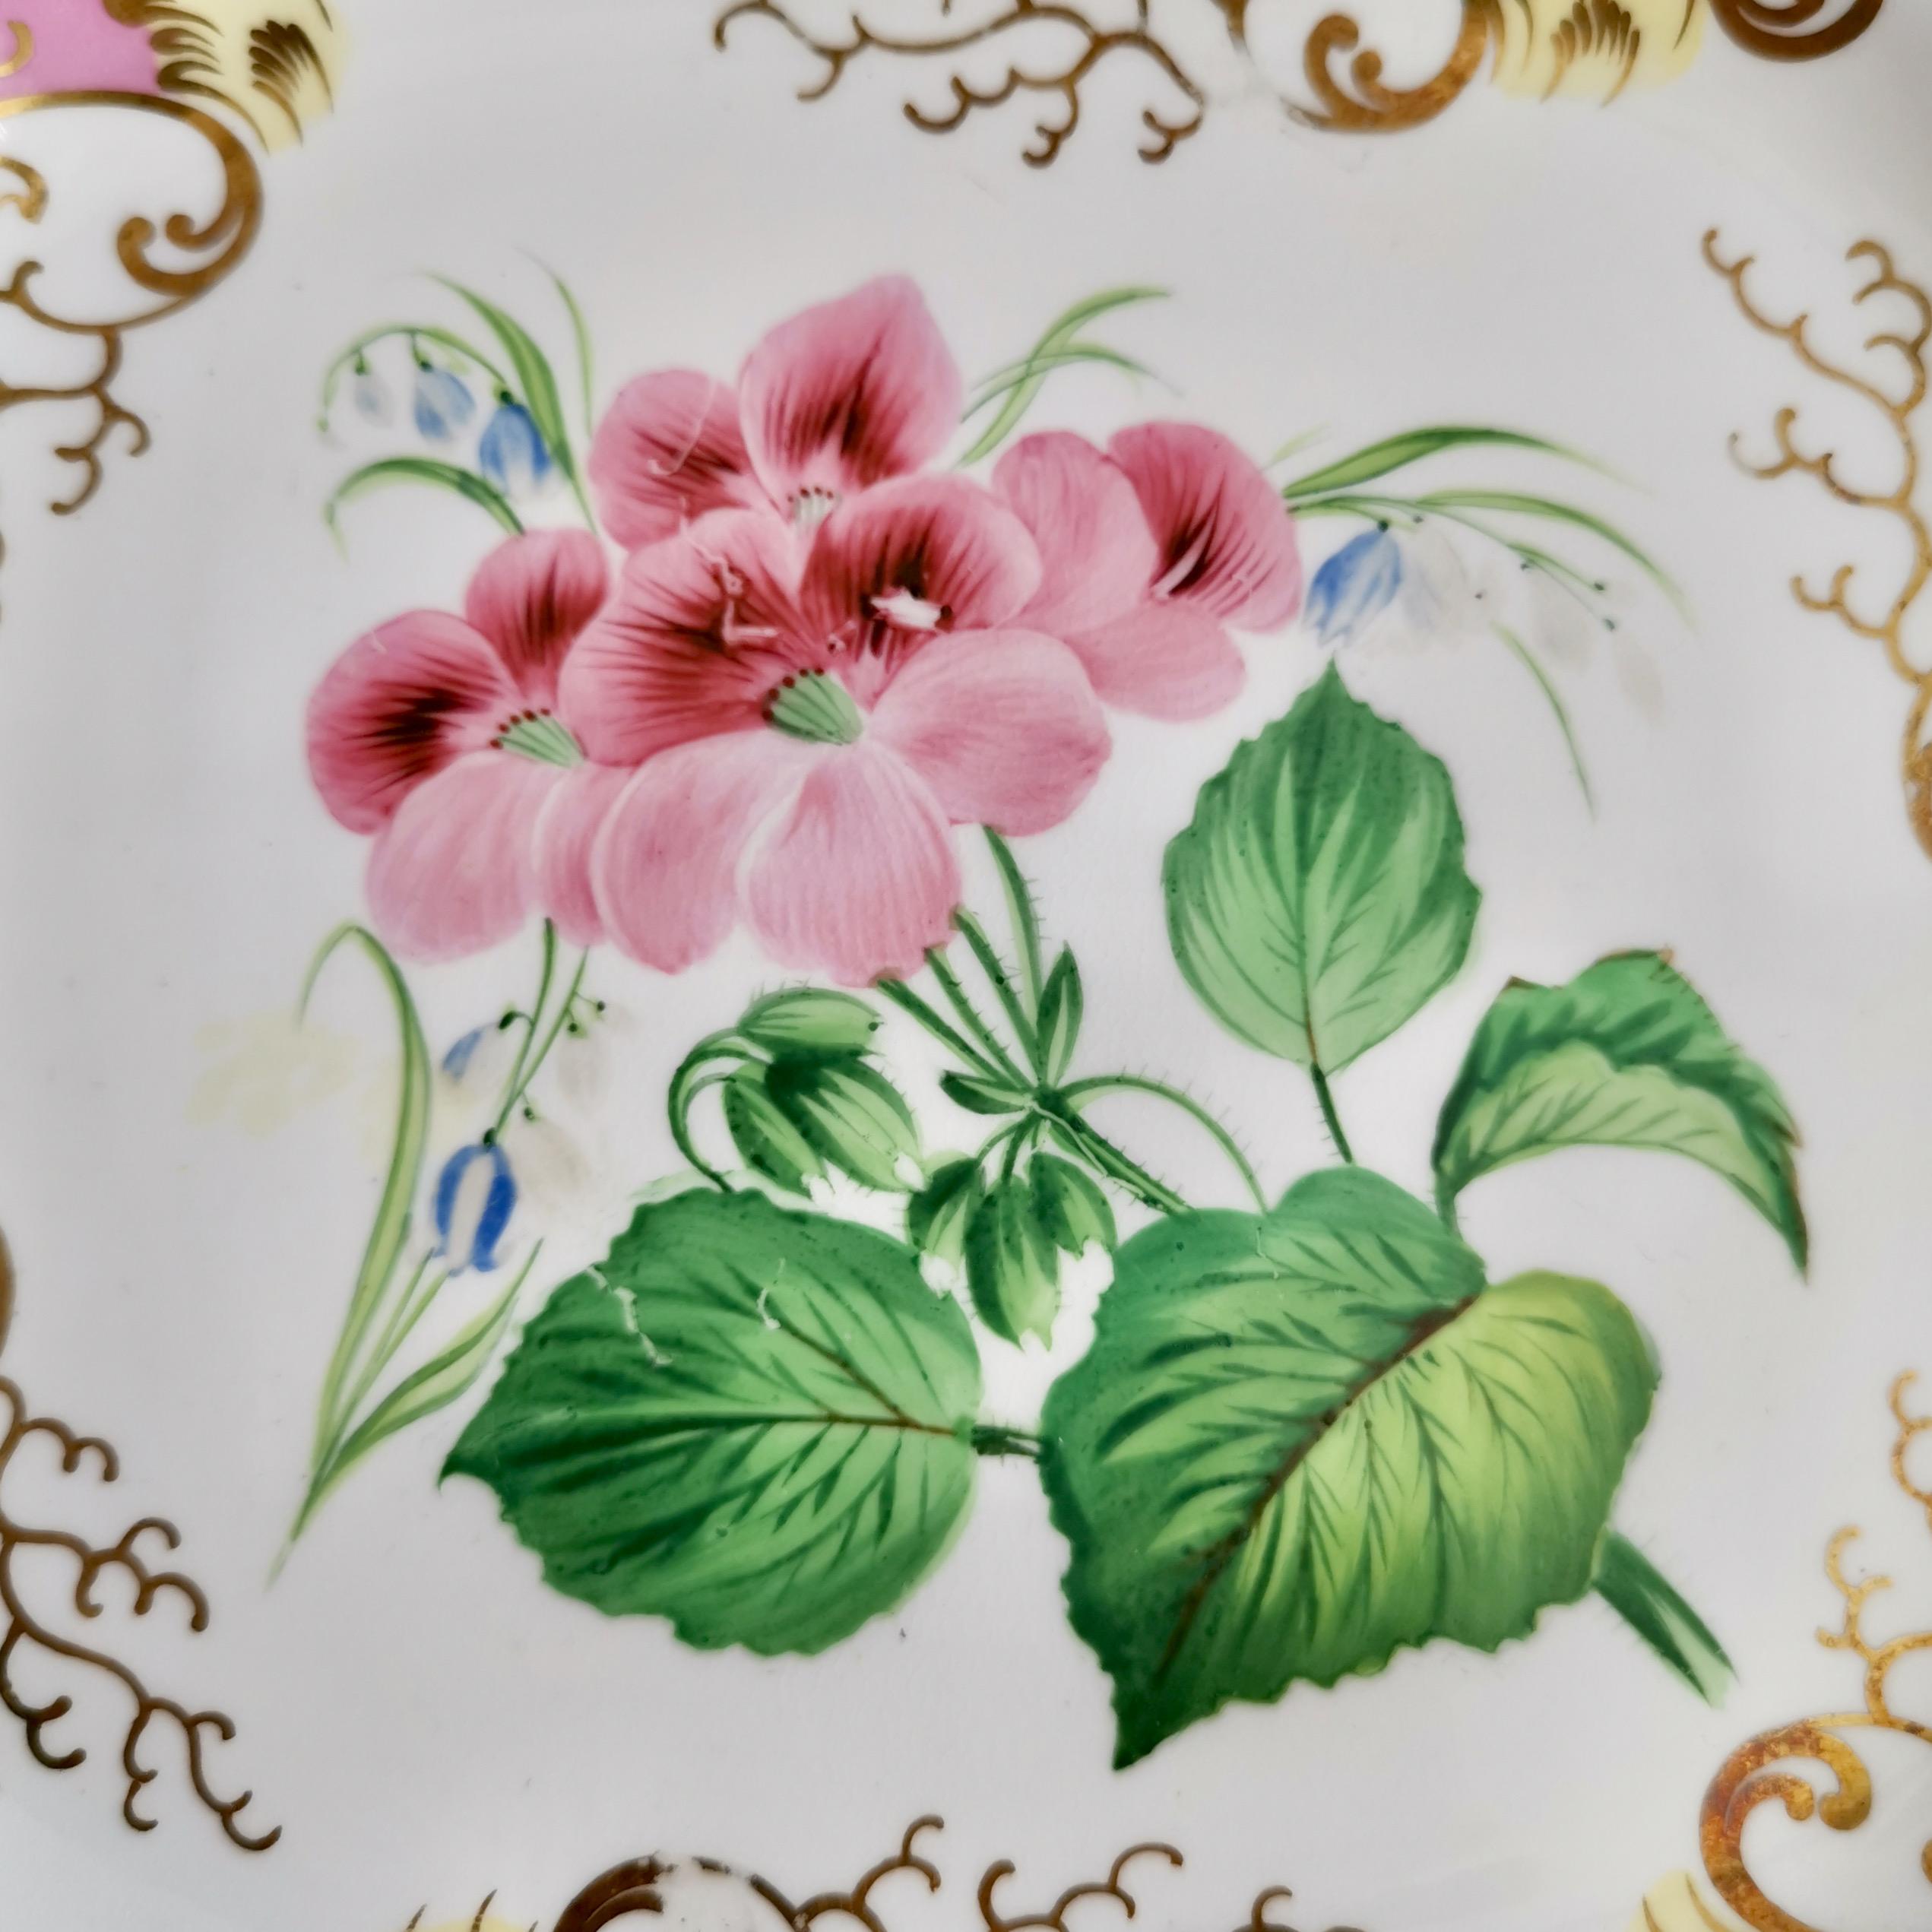 Samuel Alcock Small Porcelain Dessert Set, Pink with Flowers, Victorian 1854 4